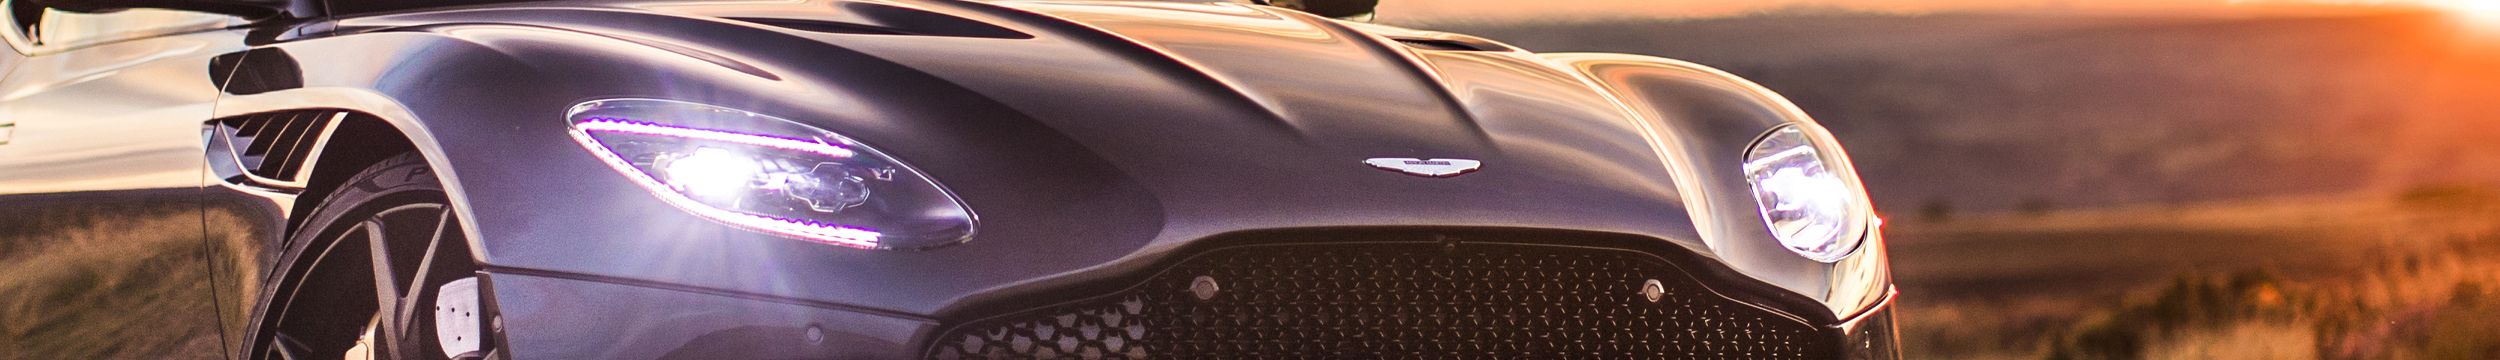 Aston Martin page header image